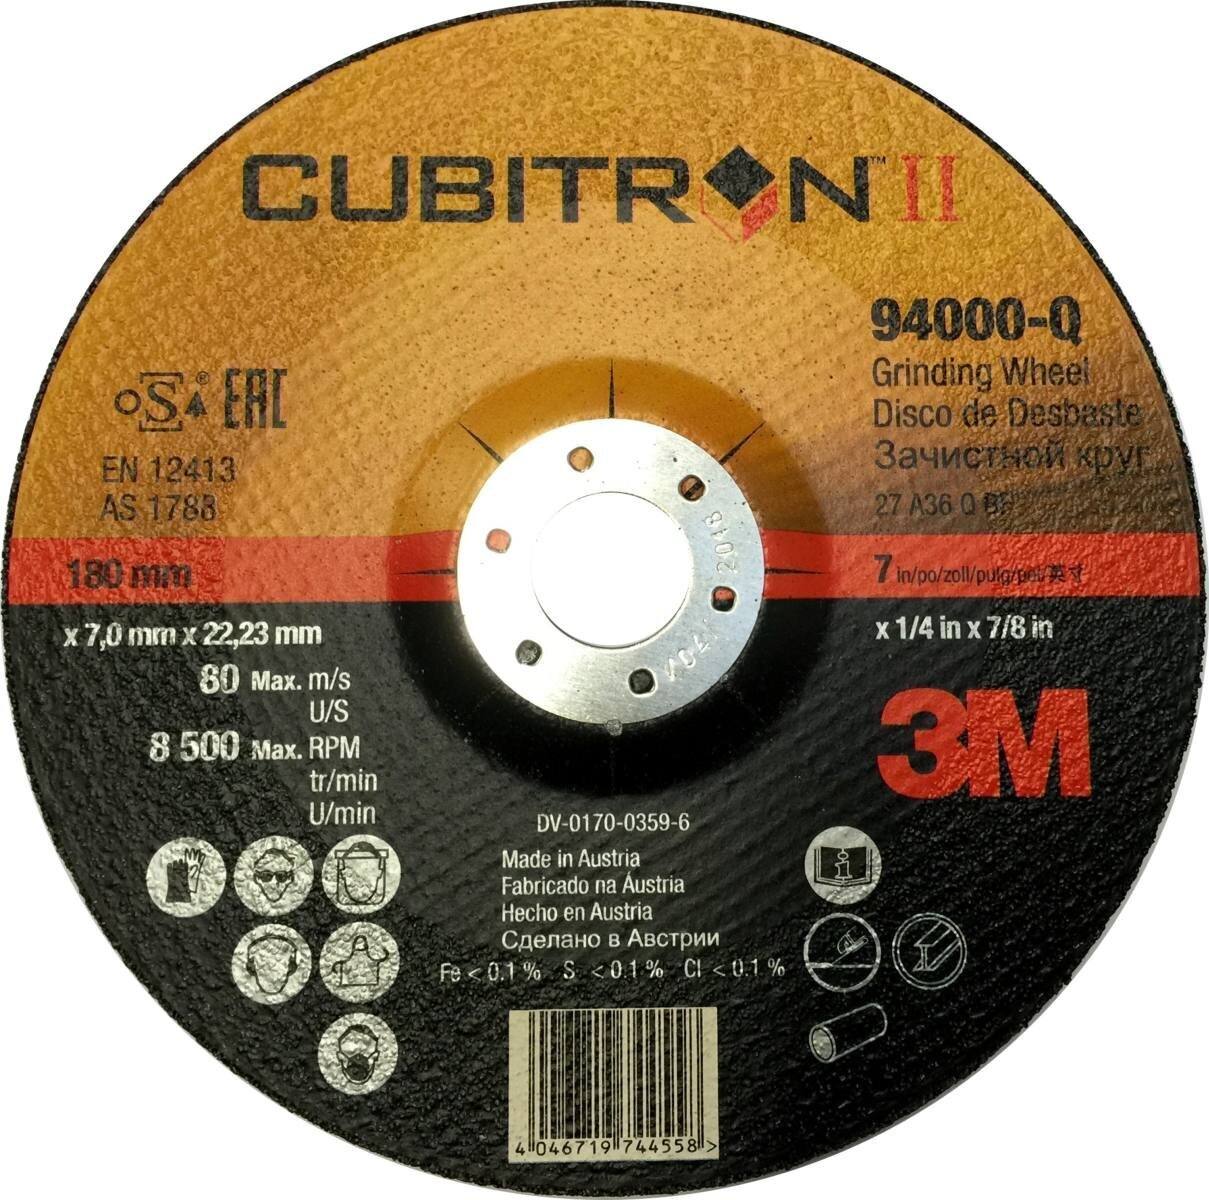 Disco de desbaste 3M Cubitron II, 115 mm, 7.0 mm, 22.23 mm, 36 , tipo 27